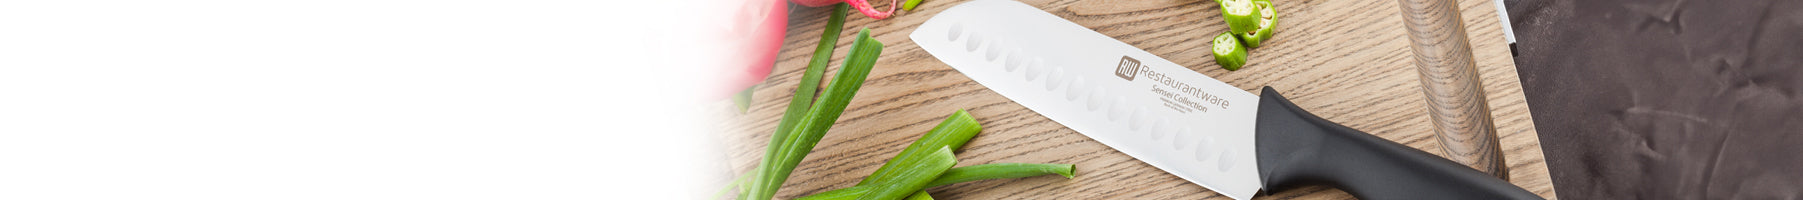 Banner_Smallwares_Kitchen-Knives-Cutlery_Santoku-Knives_235